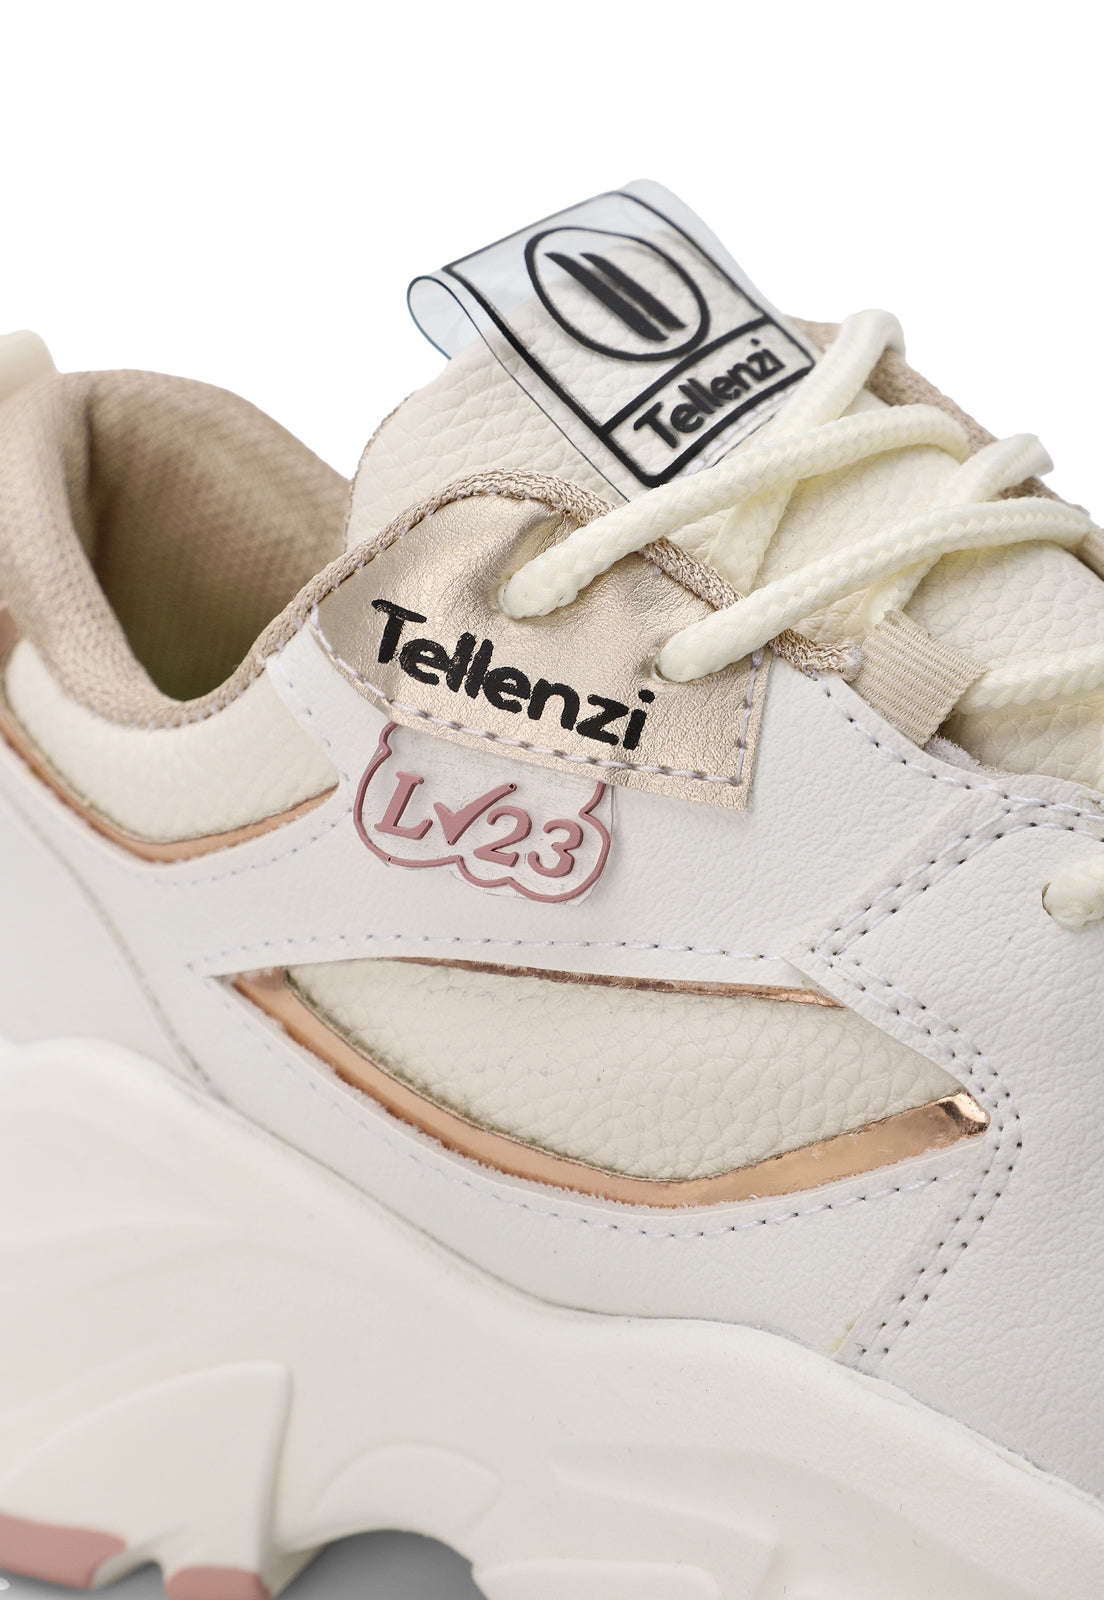 Tenis Sneakers Dama Crema Tellenzi 118